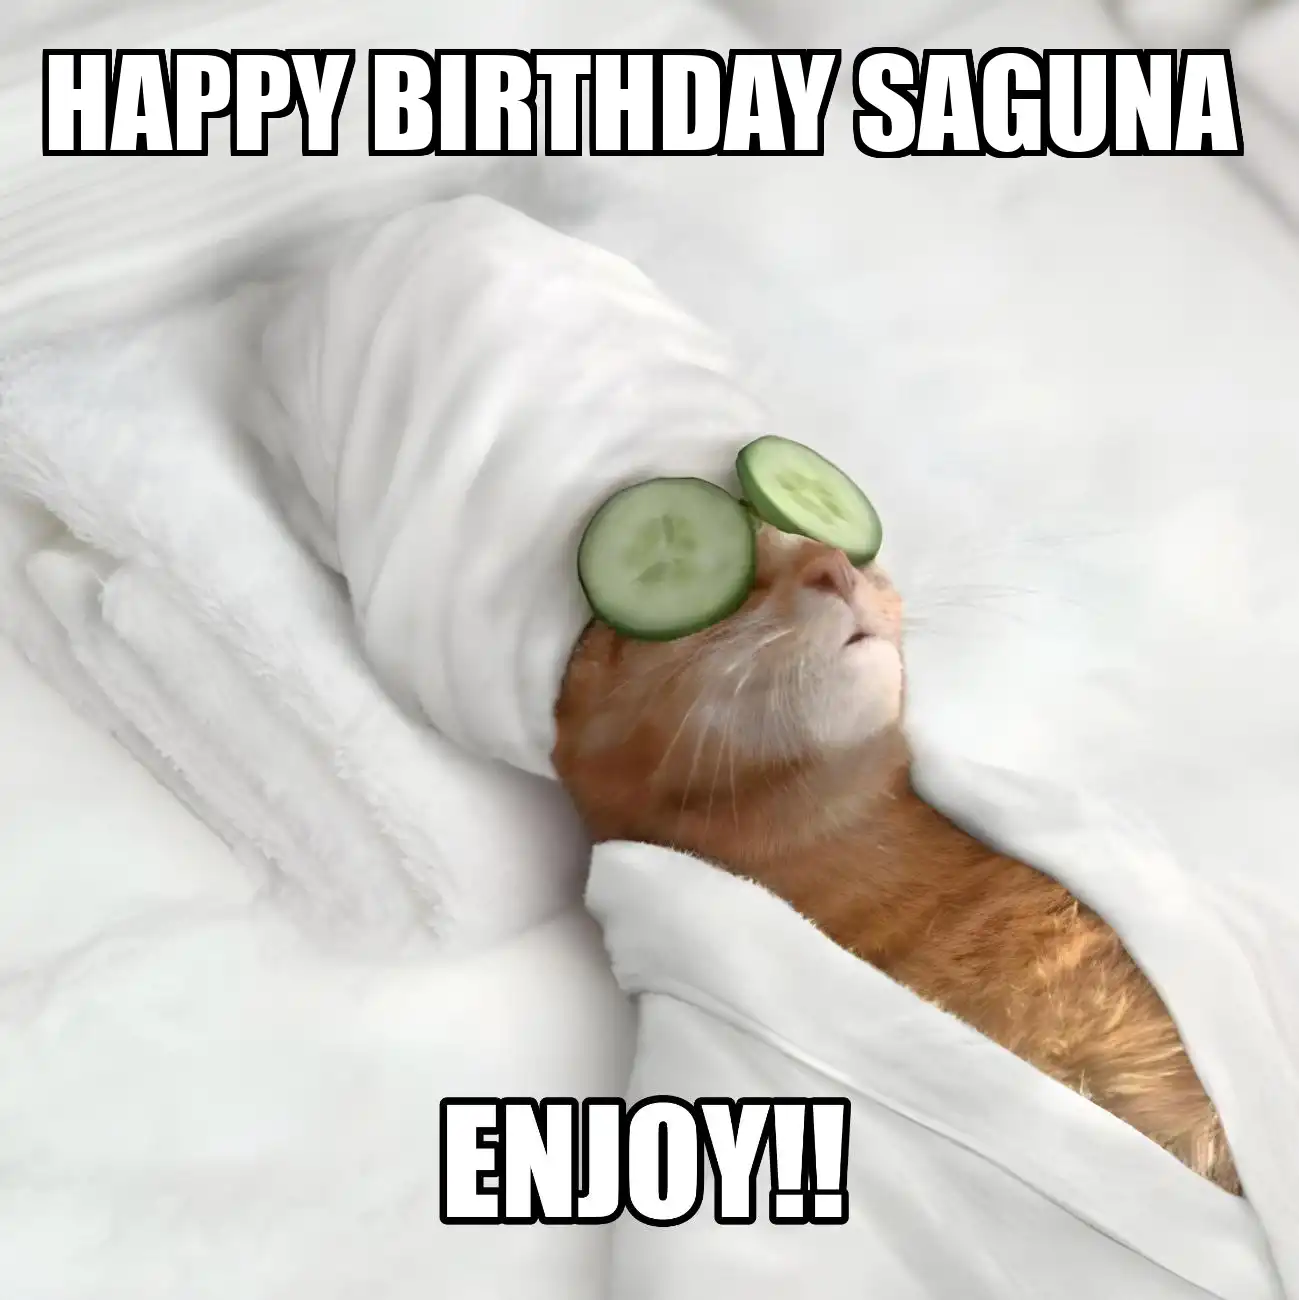 Happy Birthday Saguna Enjoy Cat Meme